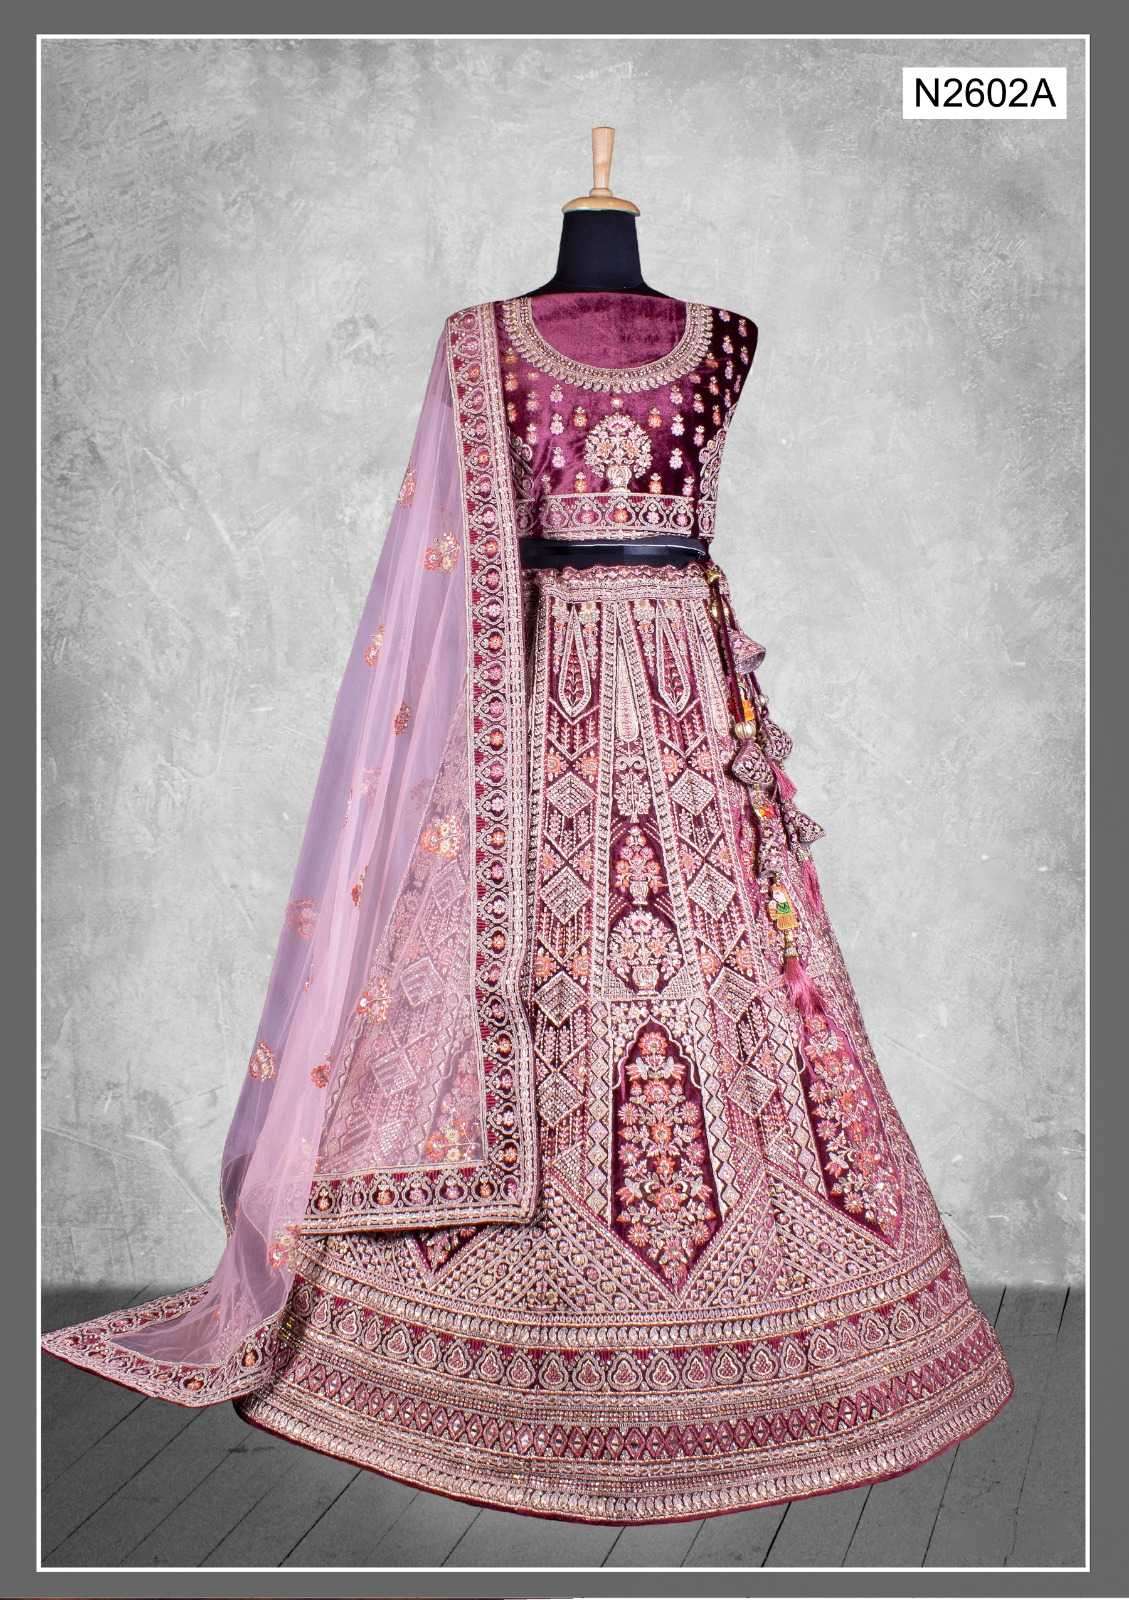 Mahotsav presents Nimaya pavitra rishta velvet exclusive designer wedding wear Lahenga choli collection 